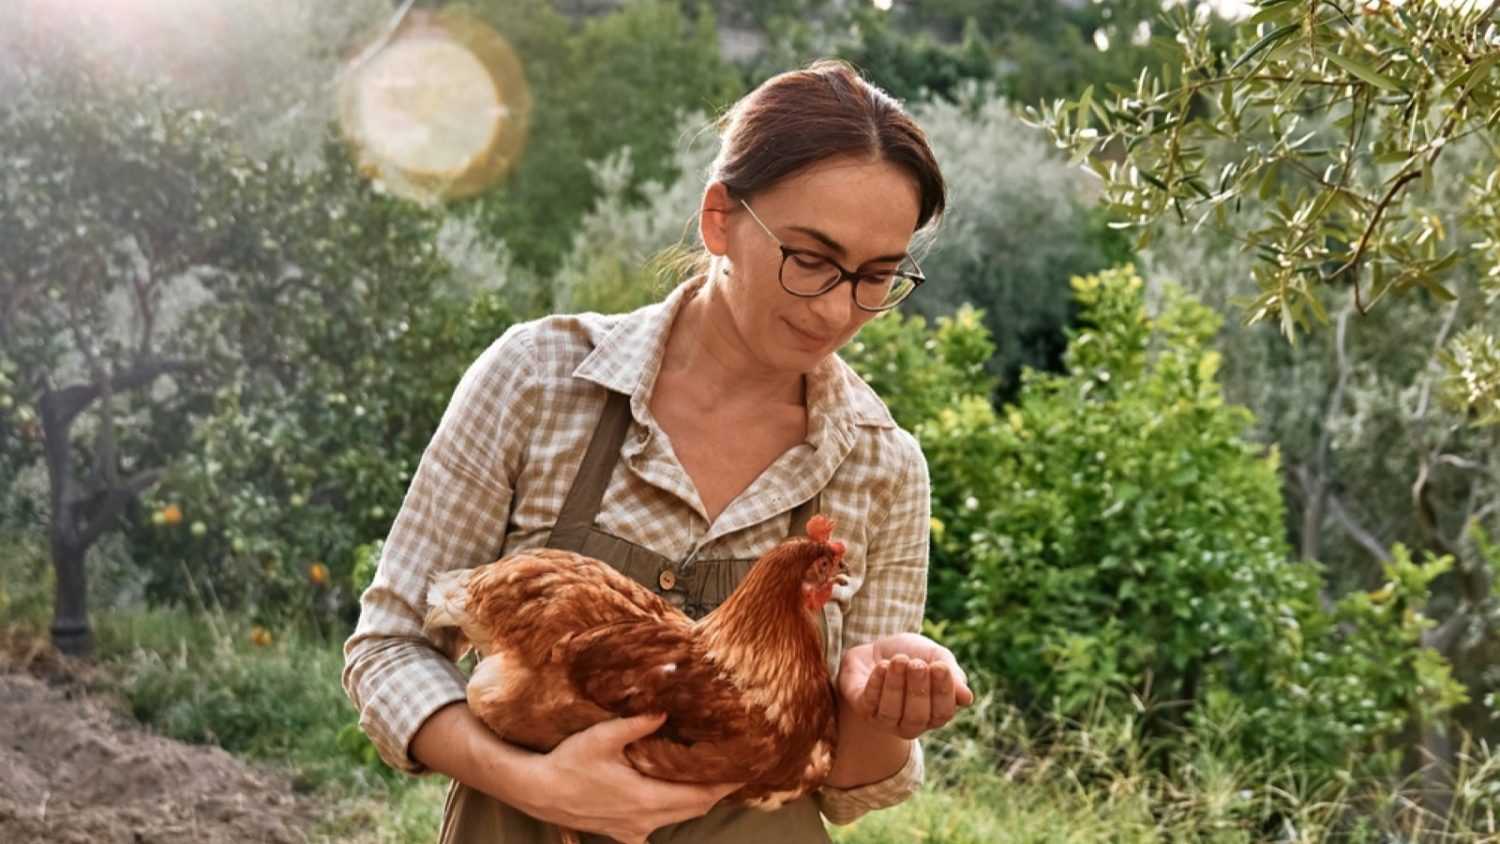 Woman feeding chicken